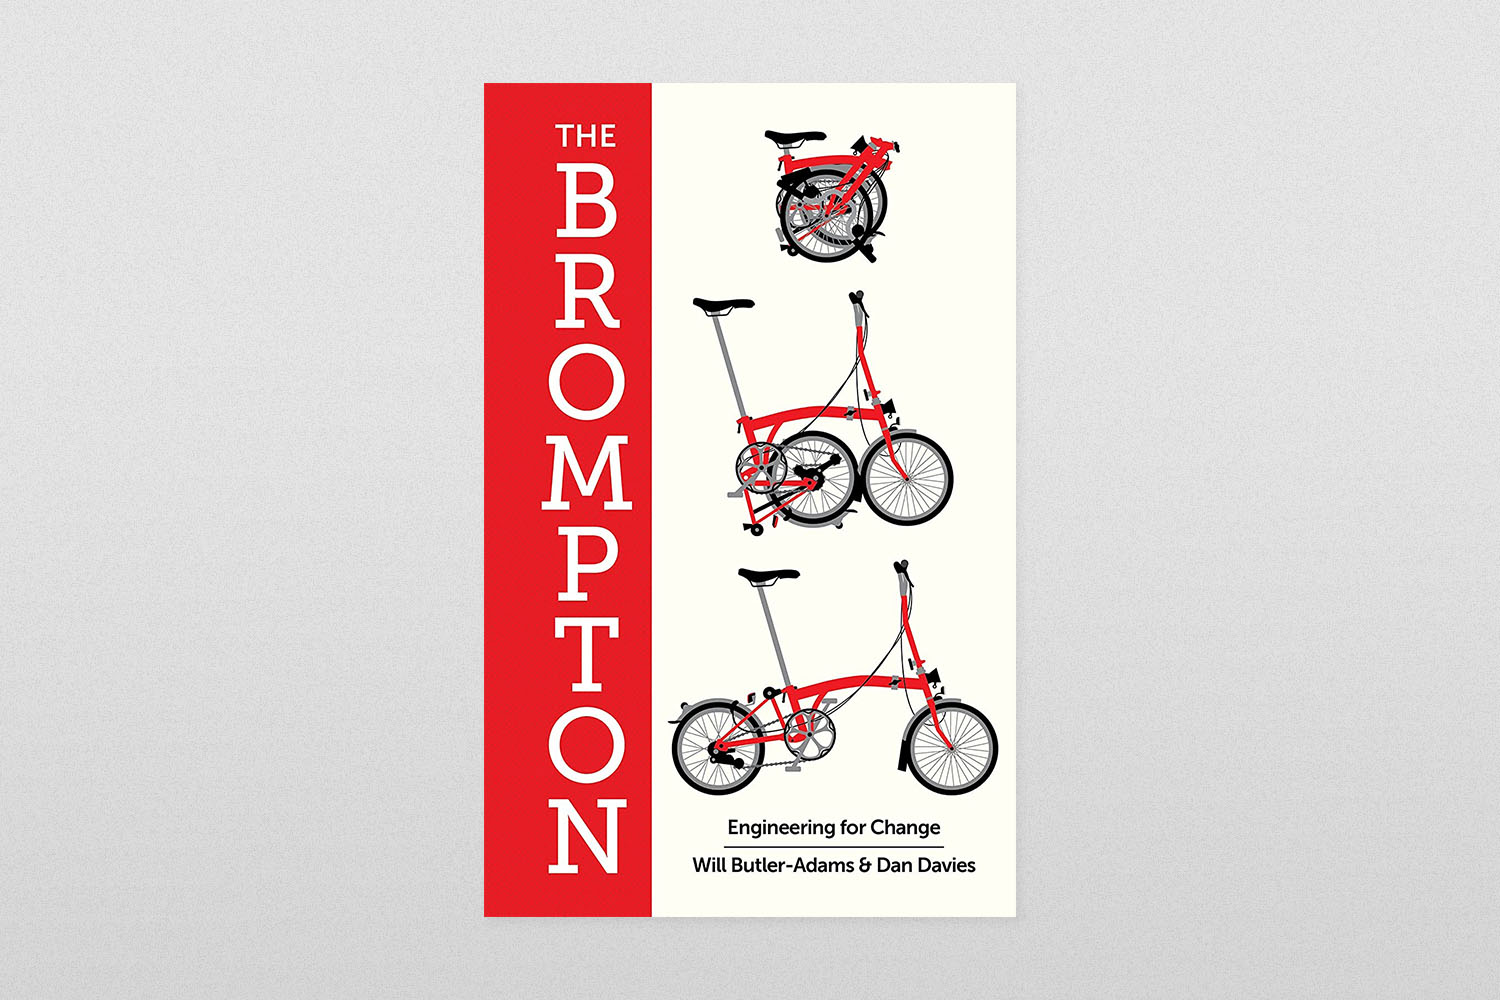 The Brompton by William Butler-Adams and Dan Davies